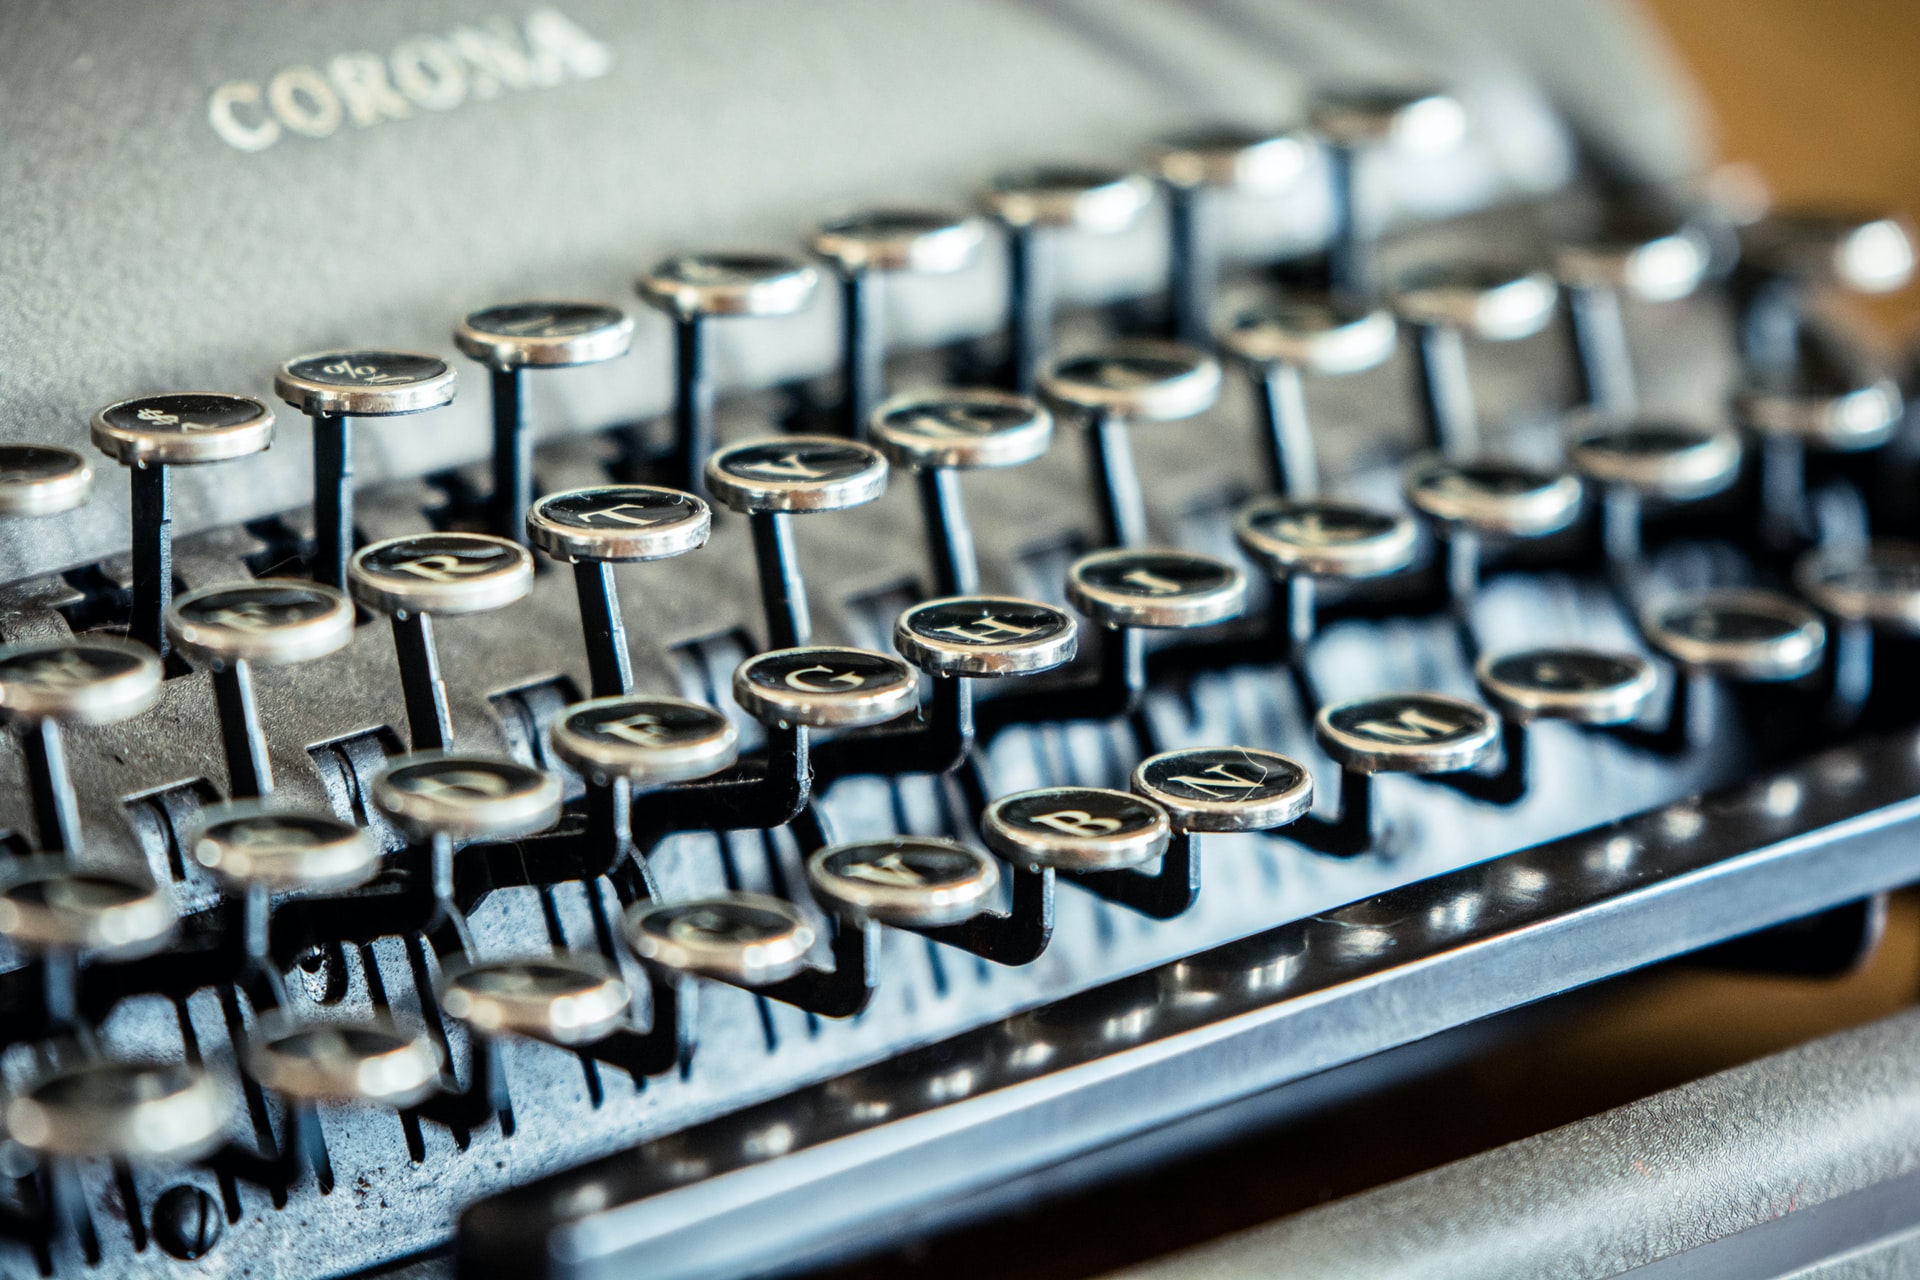 Typewriter with round keys